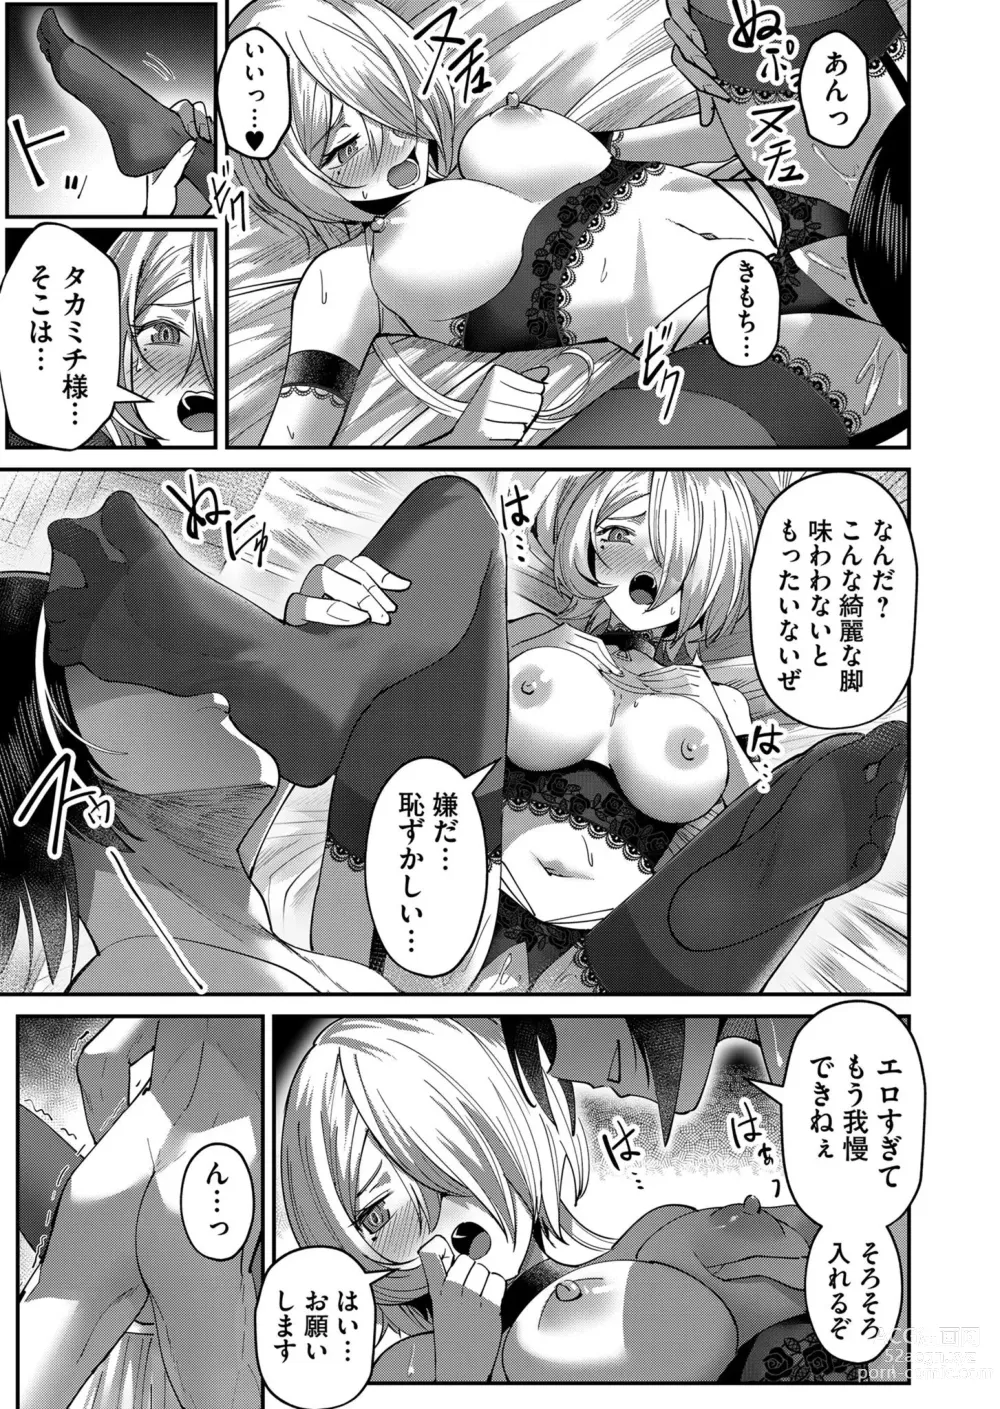 Page 191 of manga Kichiku Eiyuu Vol.01